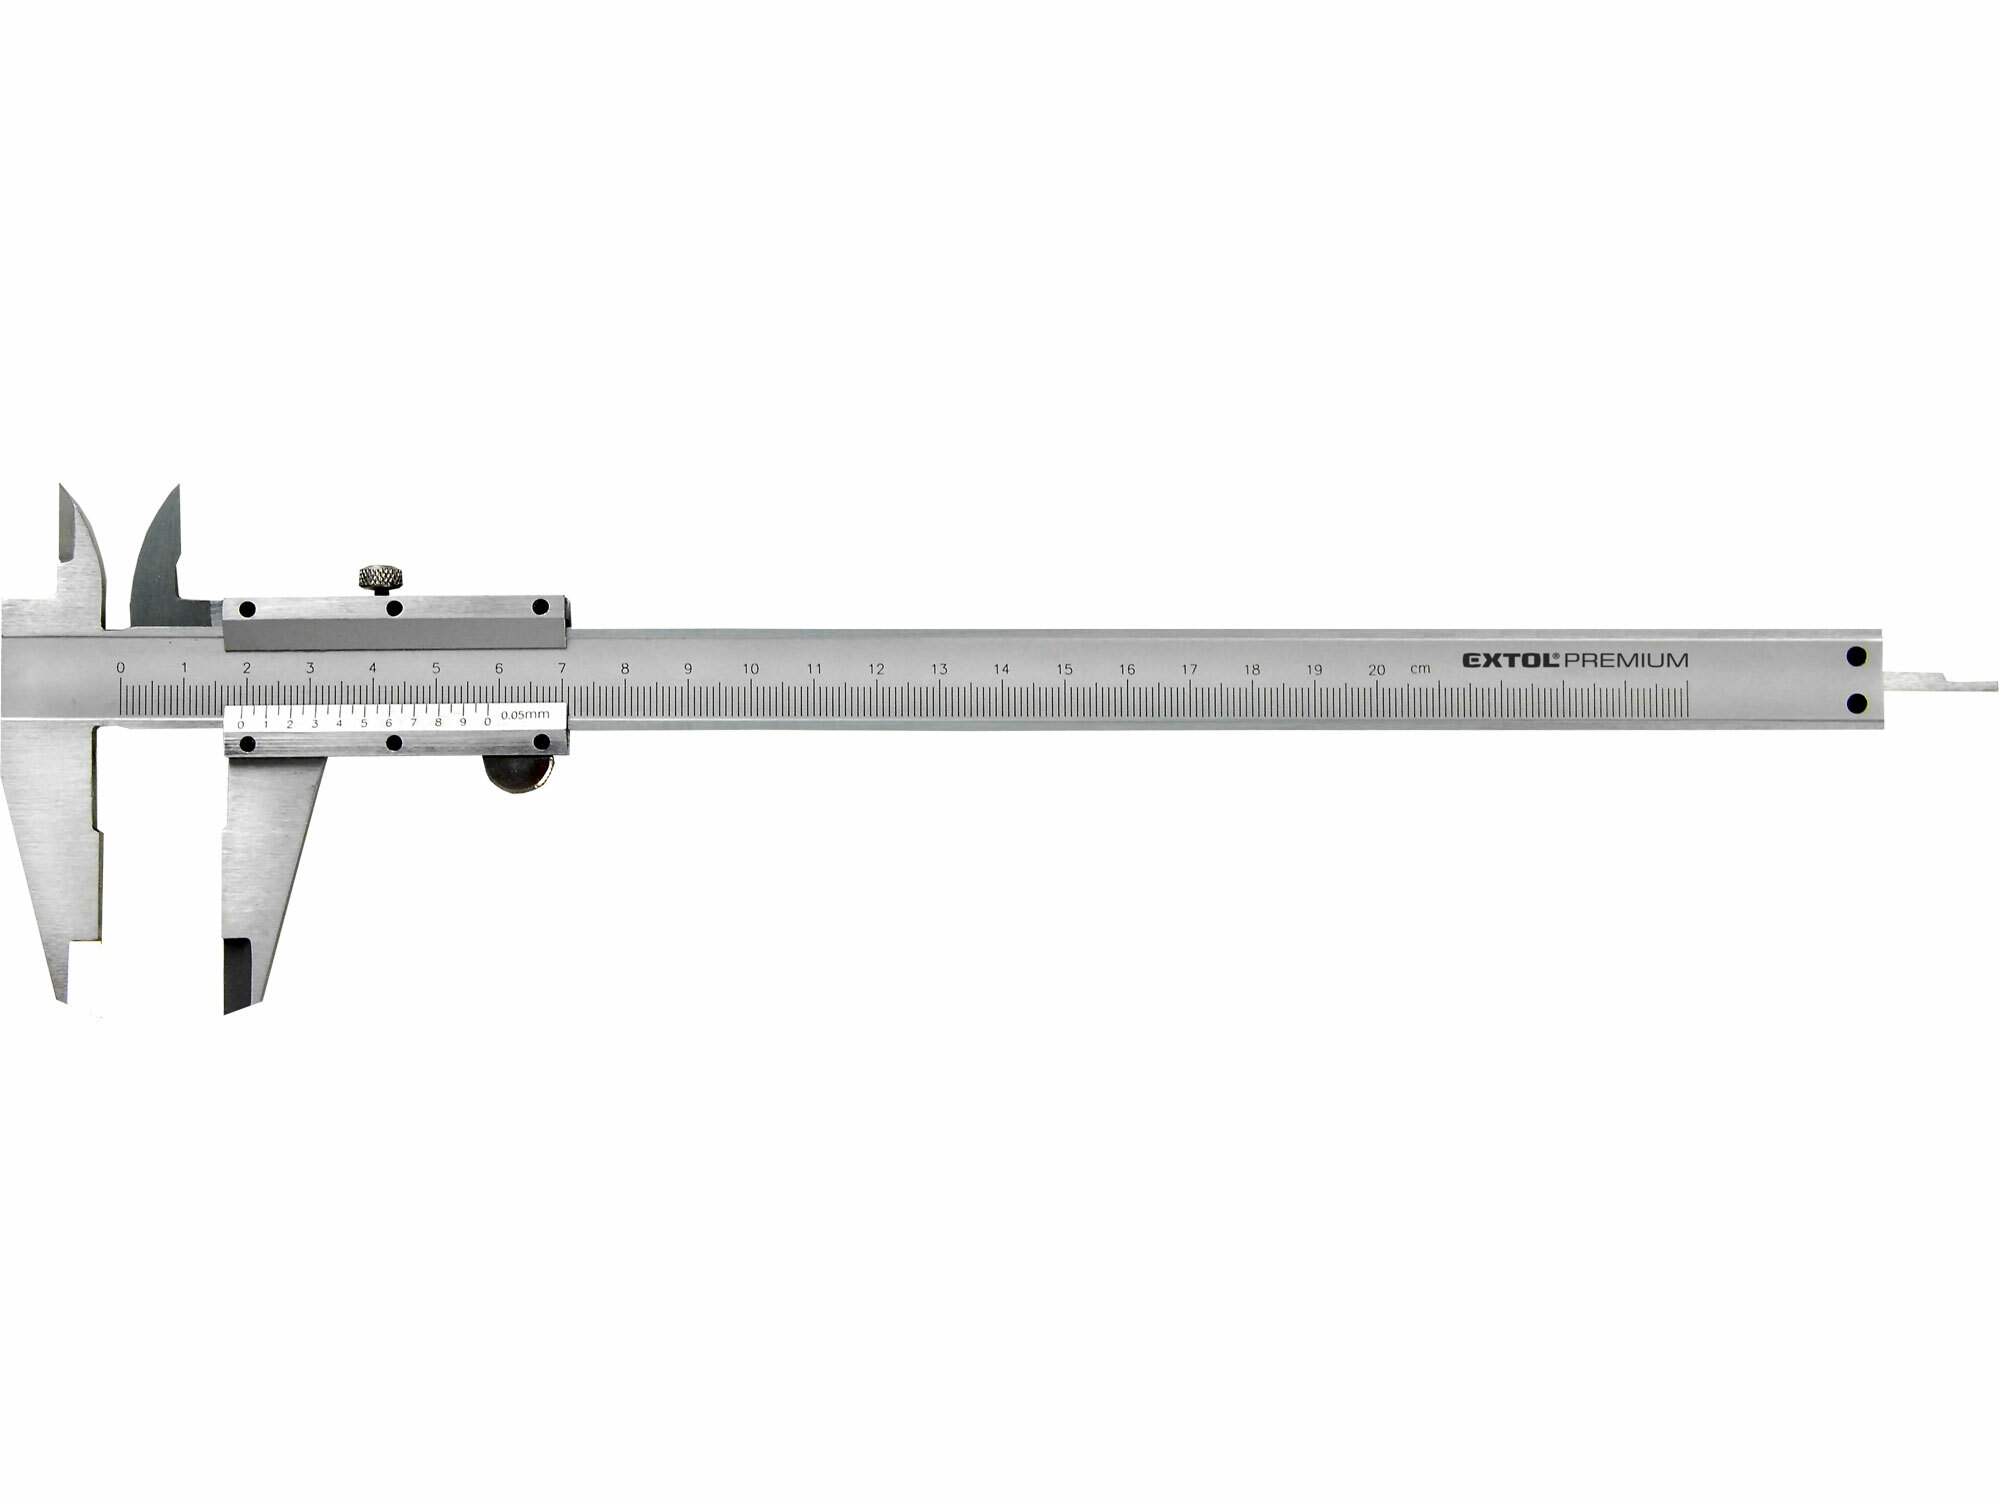 Meradlo posuvné kovové, 0-200mm, EXTOL PREMIUM